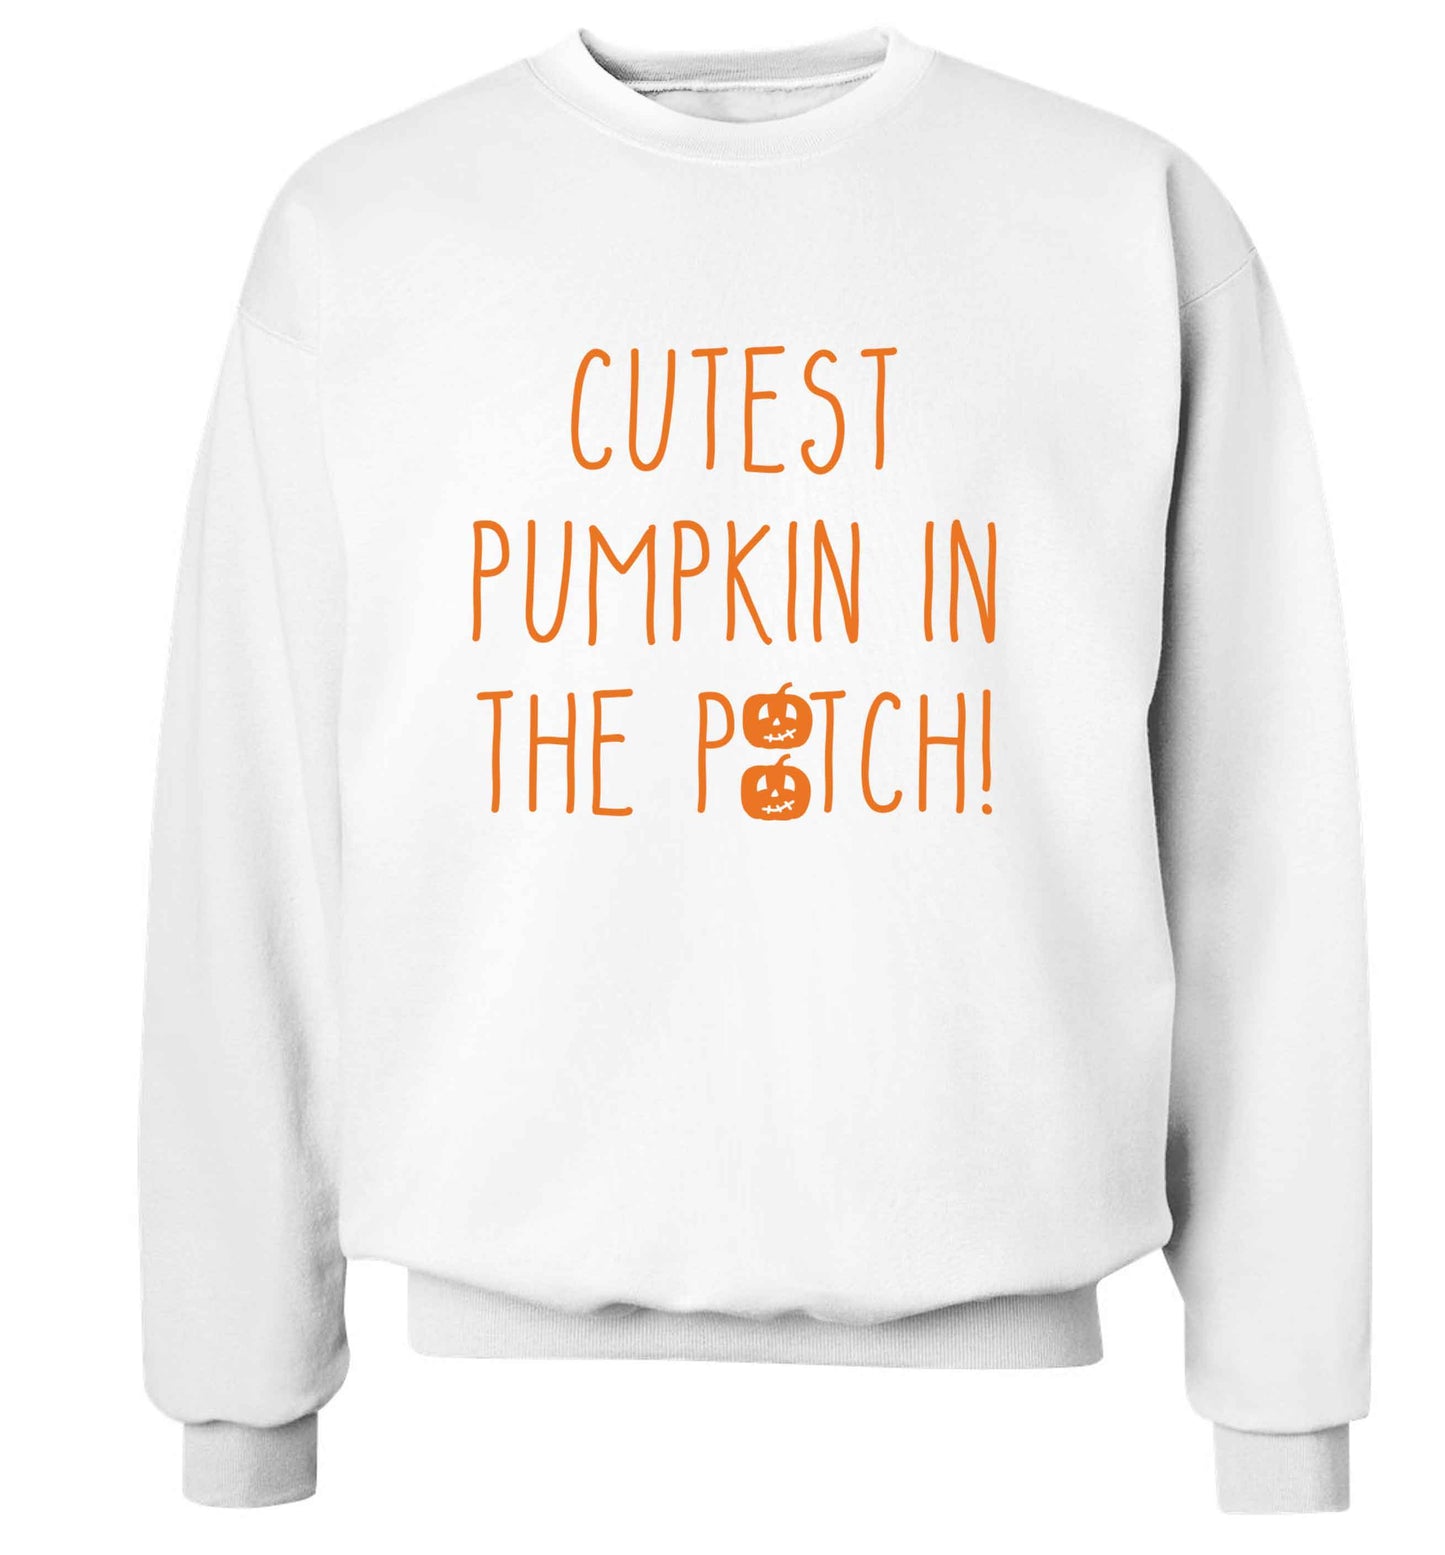 Calm Pumpkin Season adult's unisex white sweater 2XL